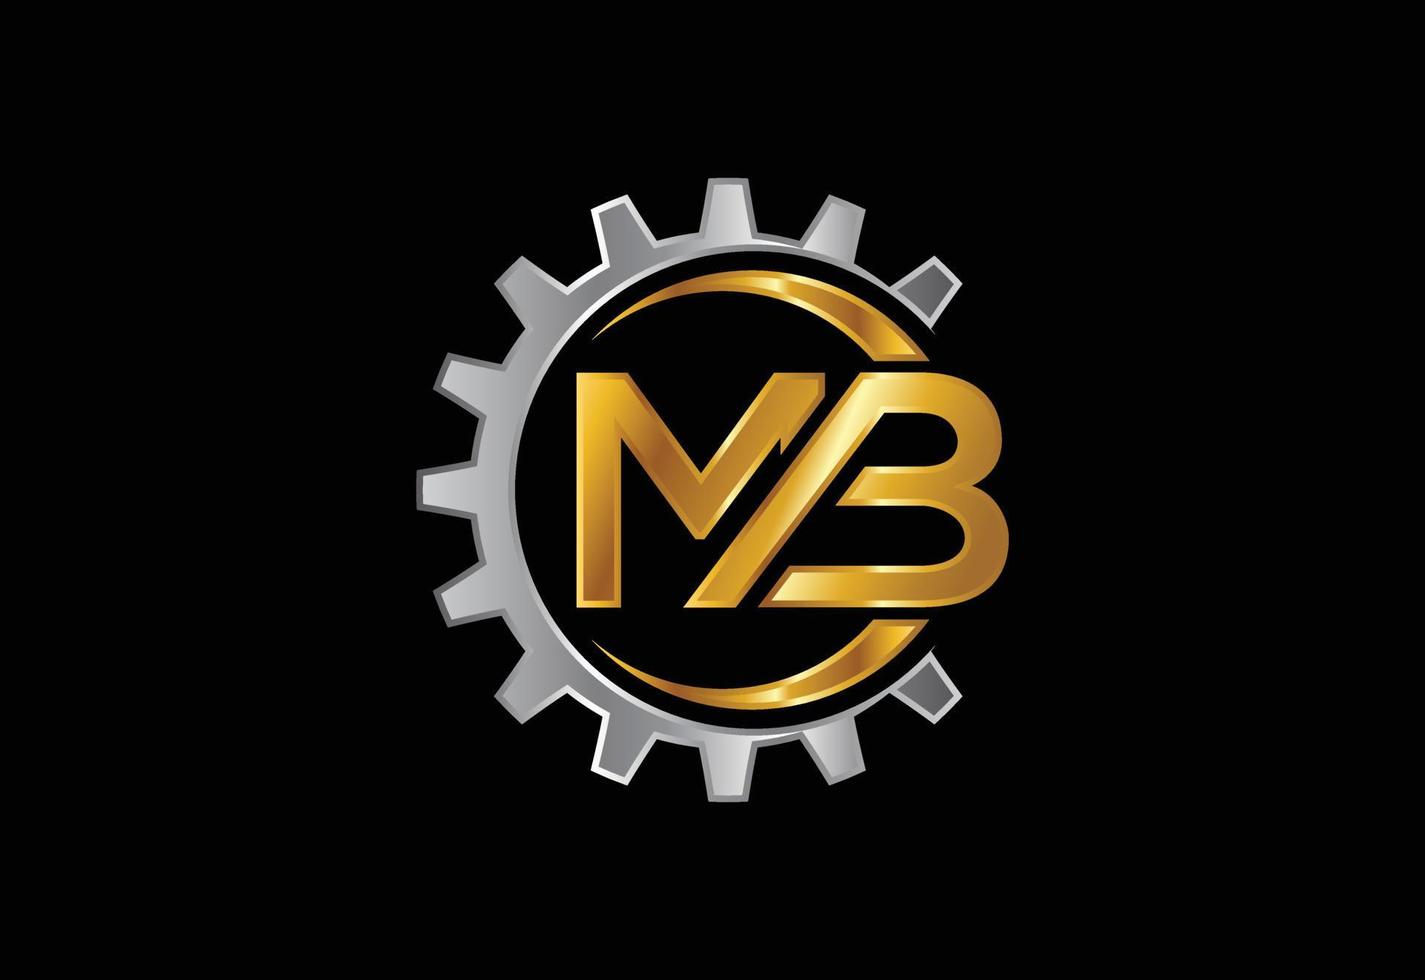 letra inicial mb vetor de design de logotipo. símbolo gráfico do alfabeto para identidade de negócios corporativos